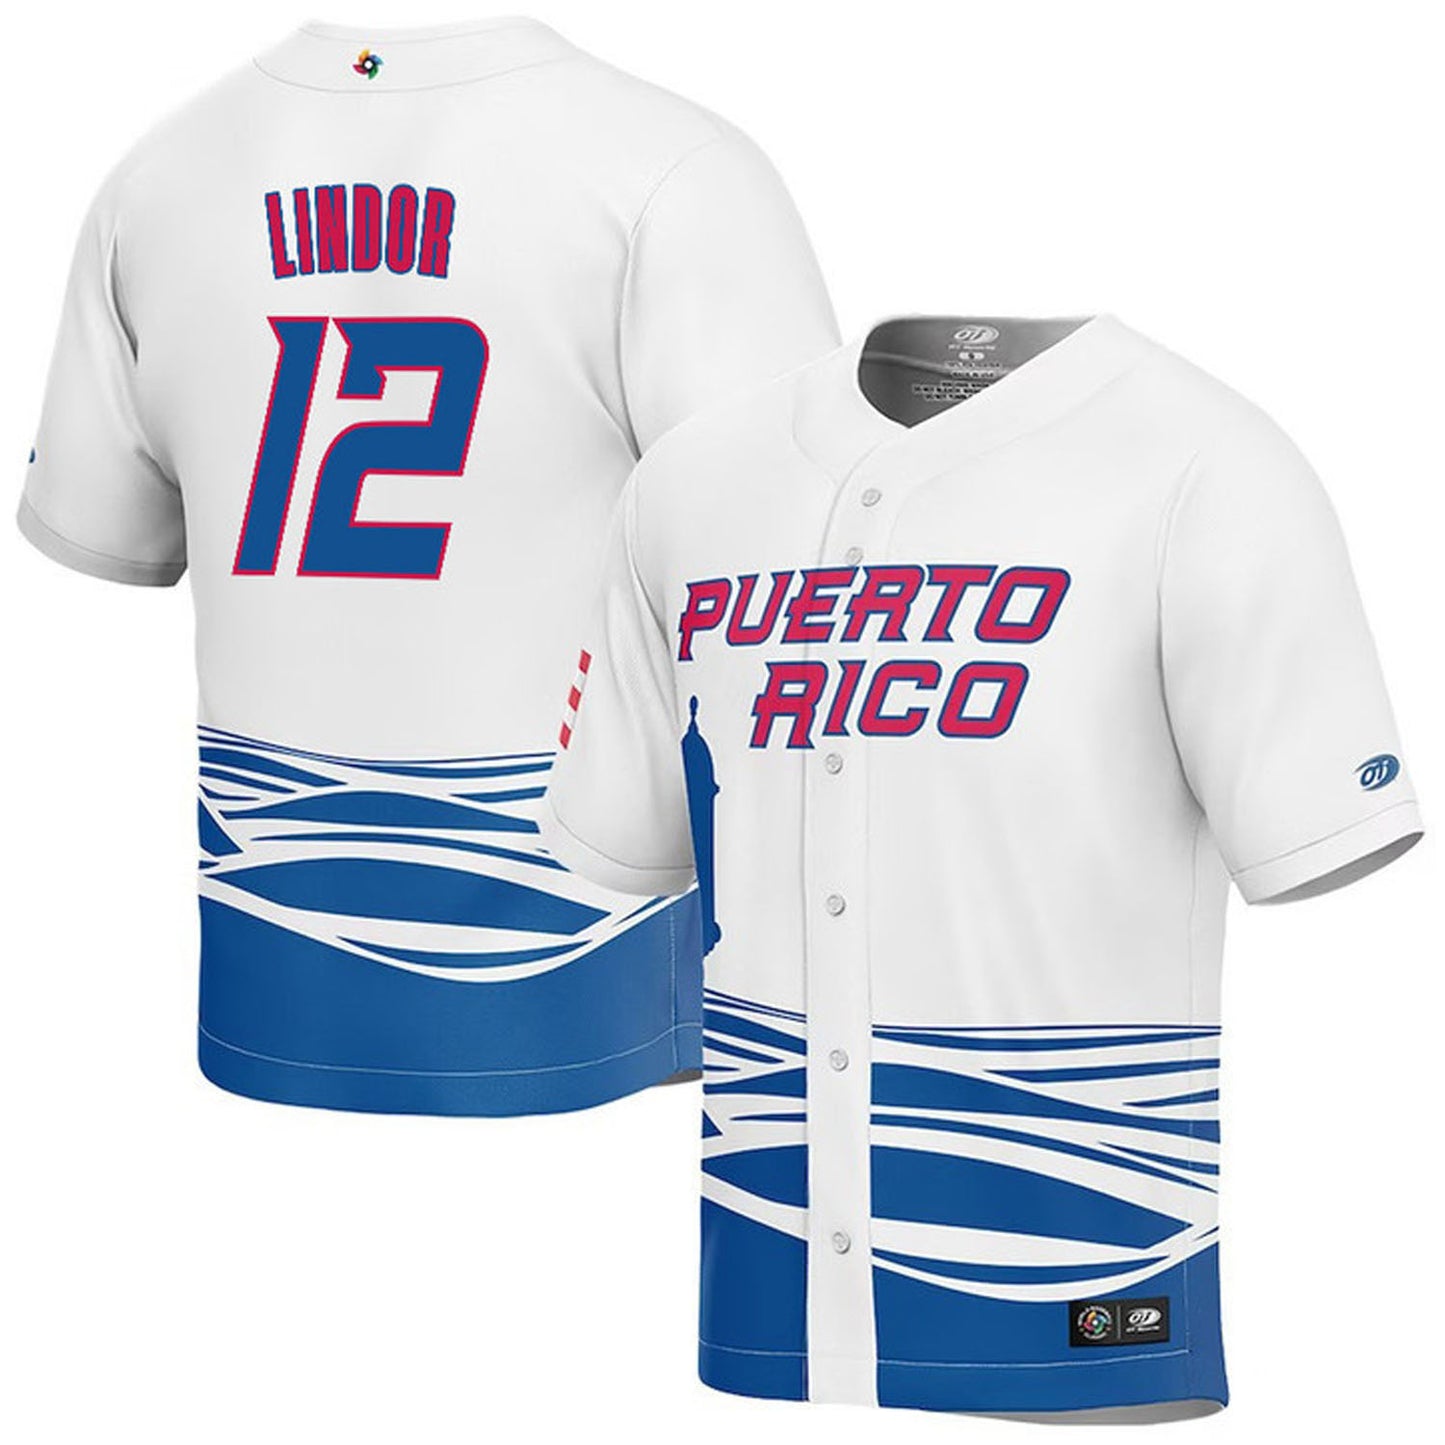 WBC Francisco Lindor Puerto Rico 12 Jersey